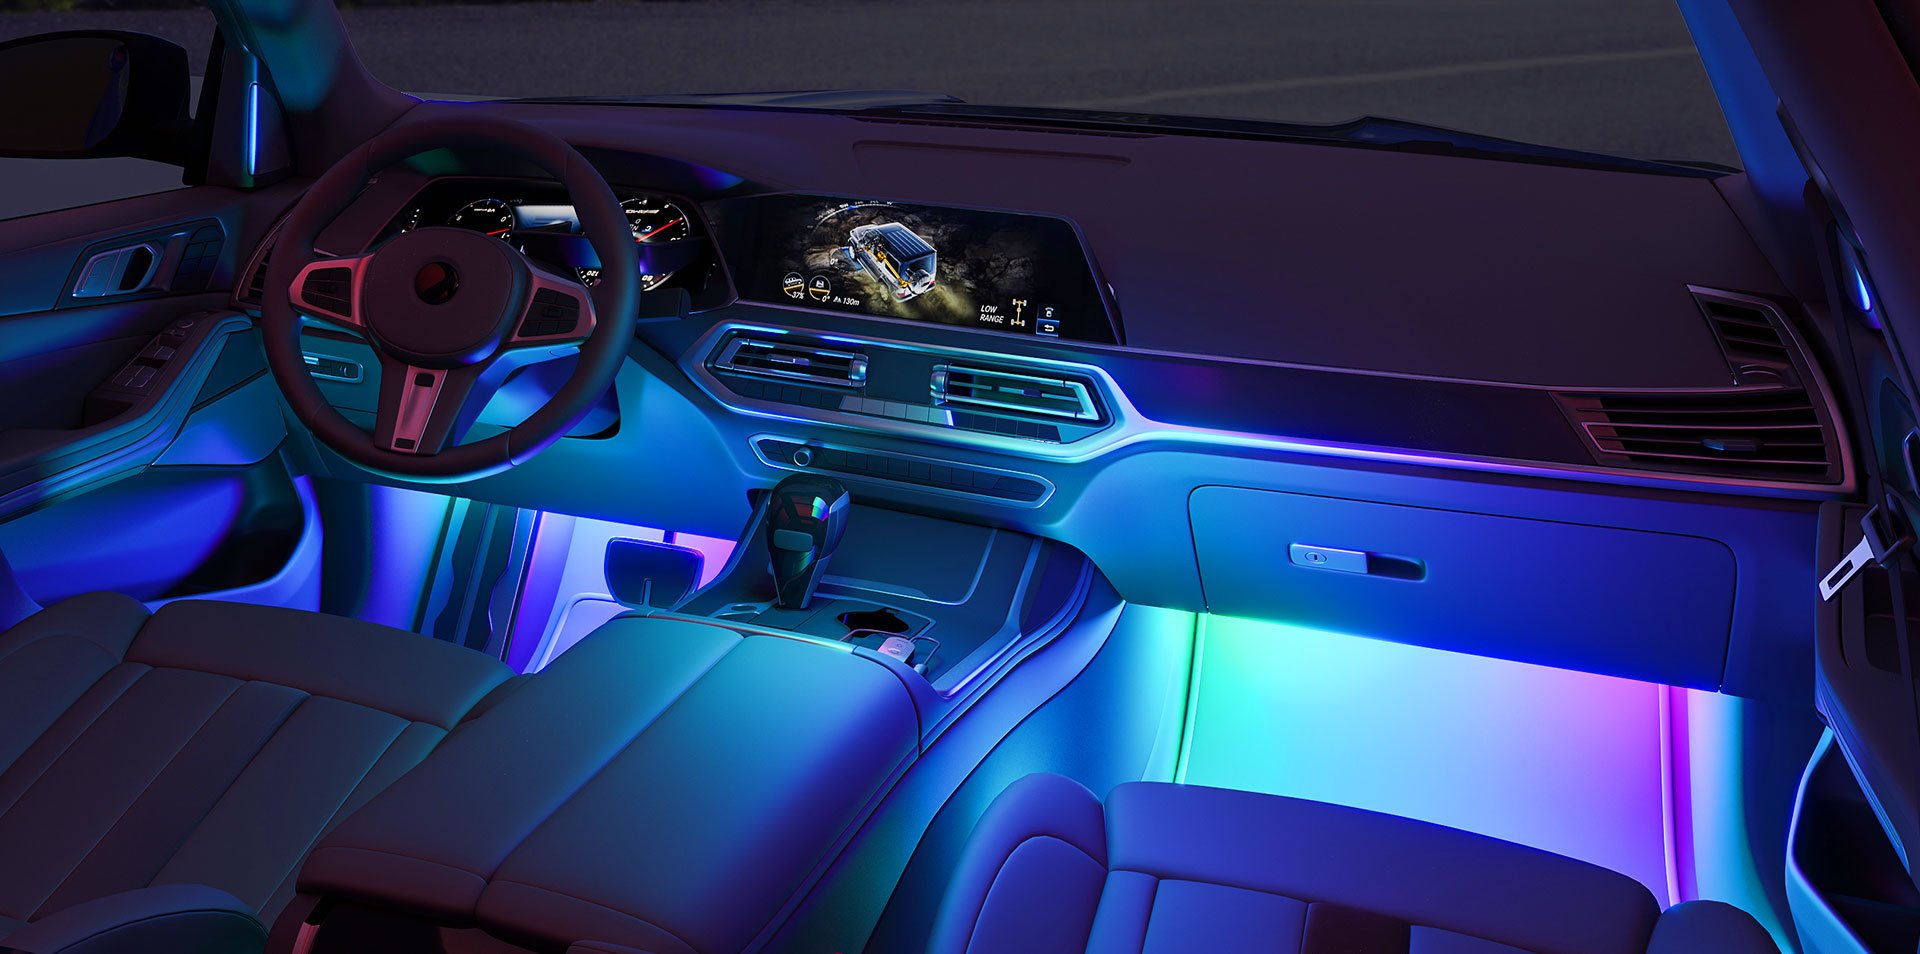 Govee Interior Led Car Light 48 In Smart Plug Under Cabinet Strip At Lowes Com